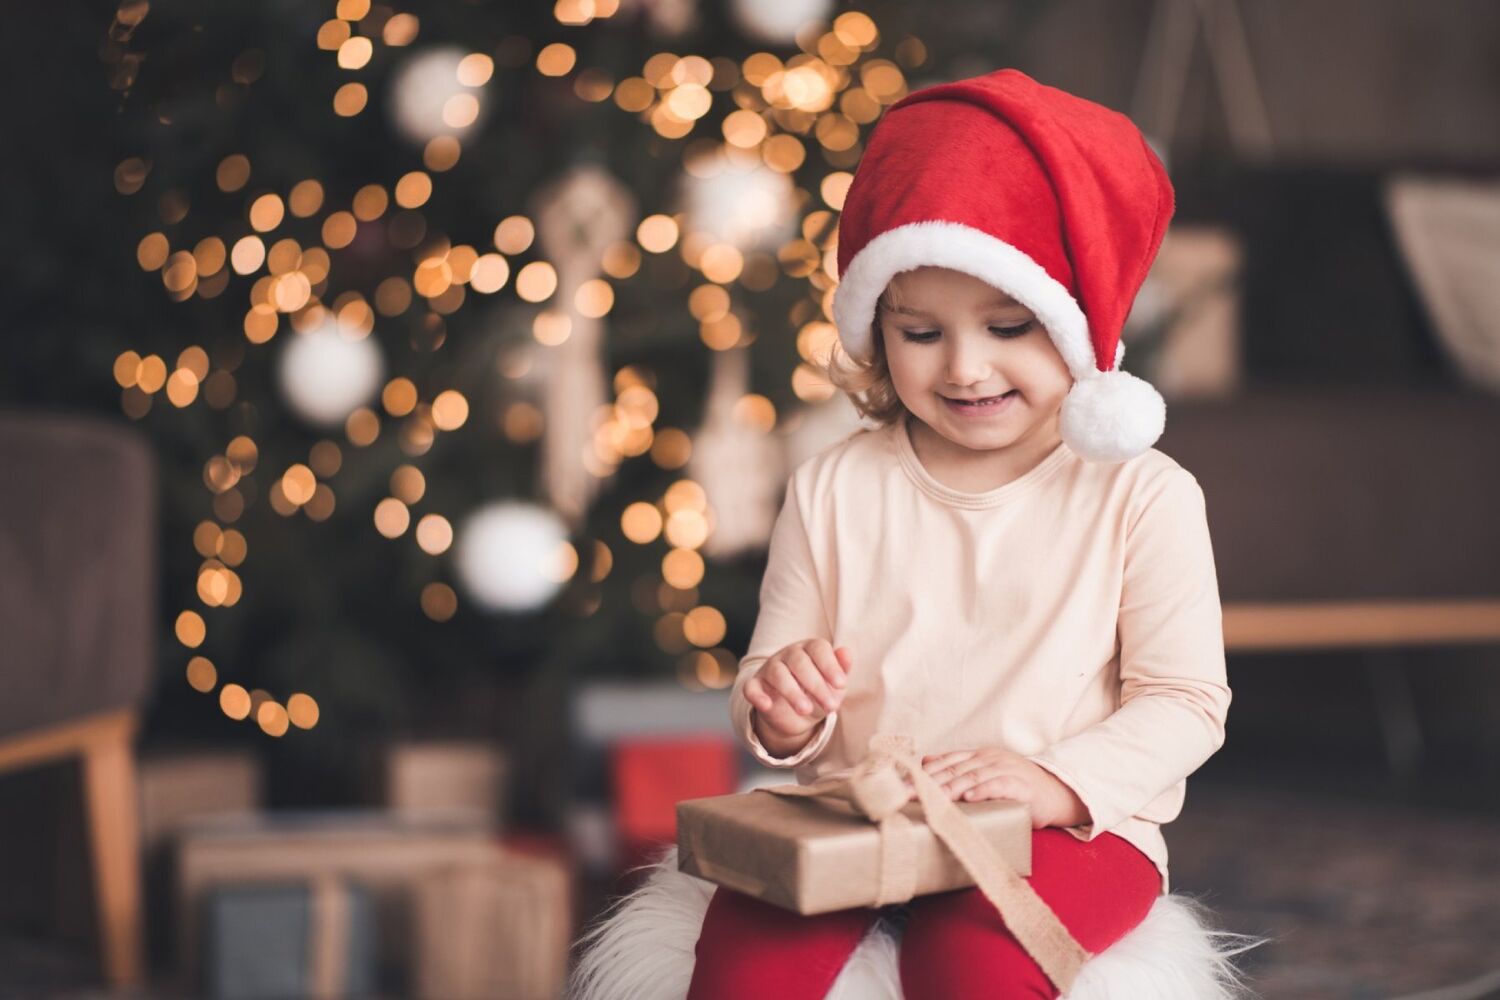 Smiling Baby Girl Wearing Santa Claus Hat And Pajamas Open Xmas Present Box Over Christmas Tree